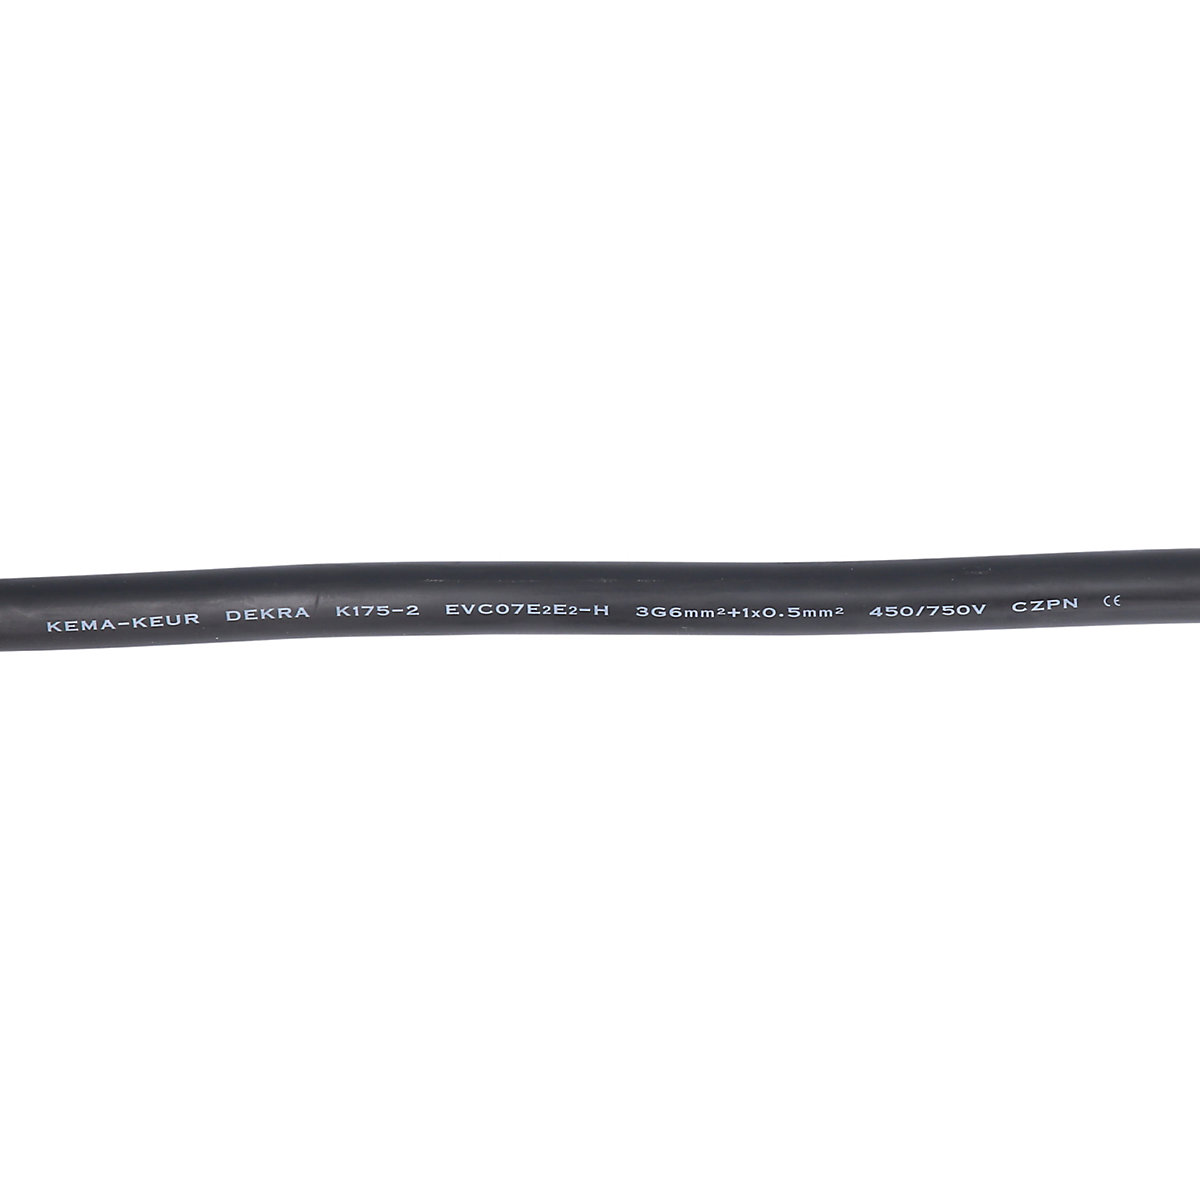 efuturo straight charging cable: type 2 socket to type 2 plug, single phase